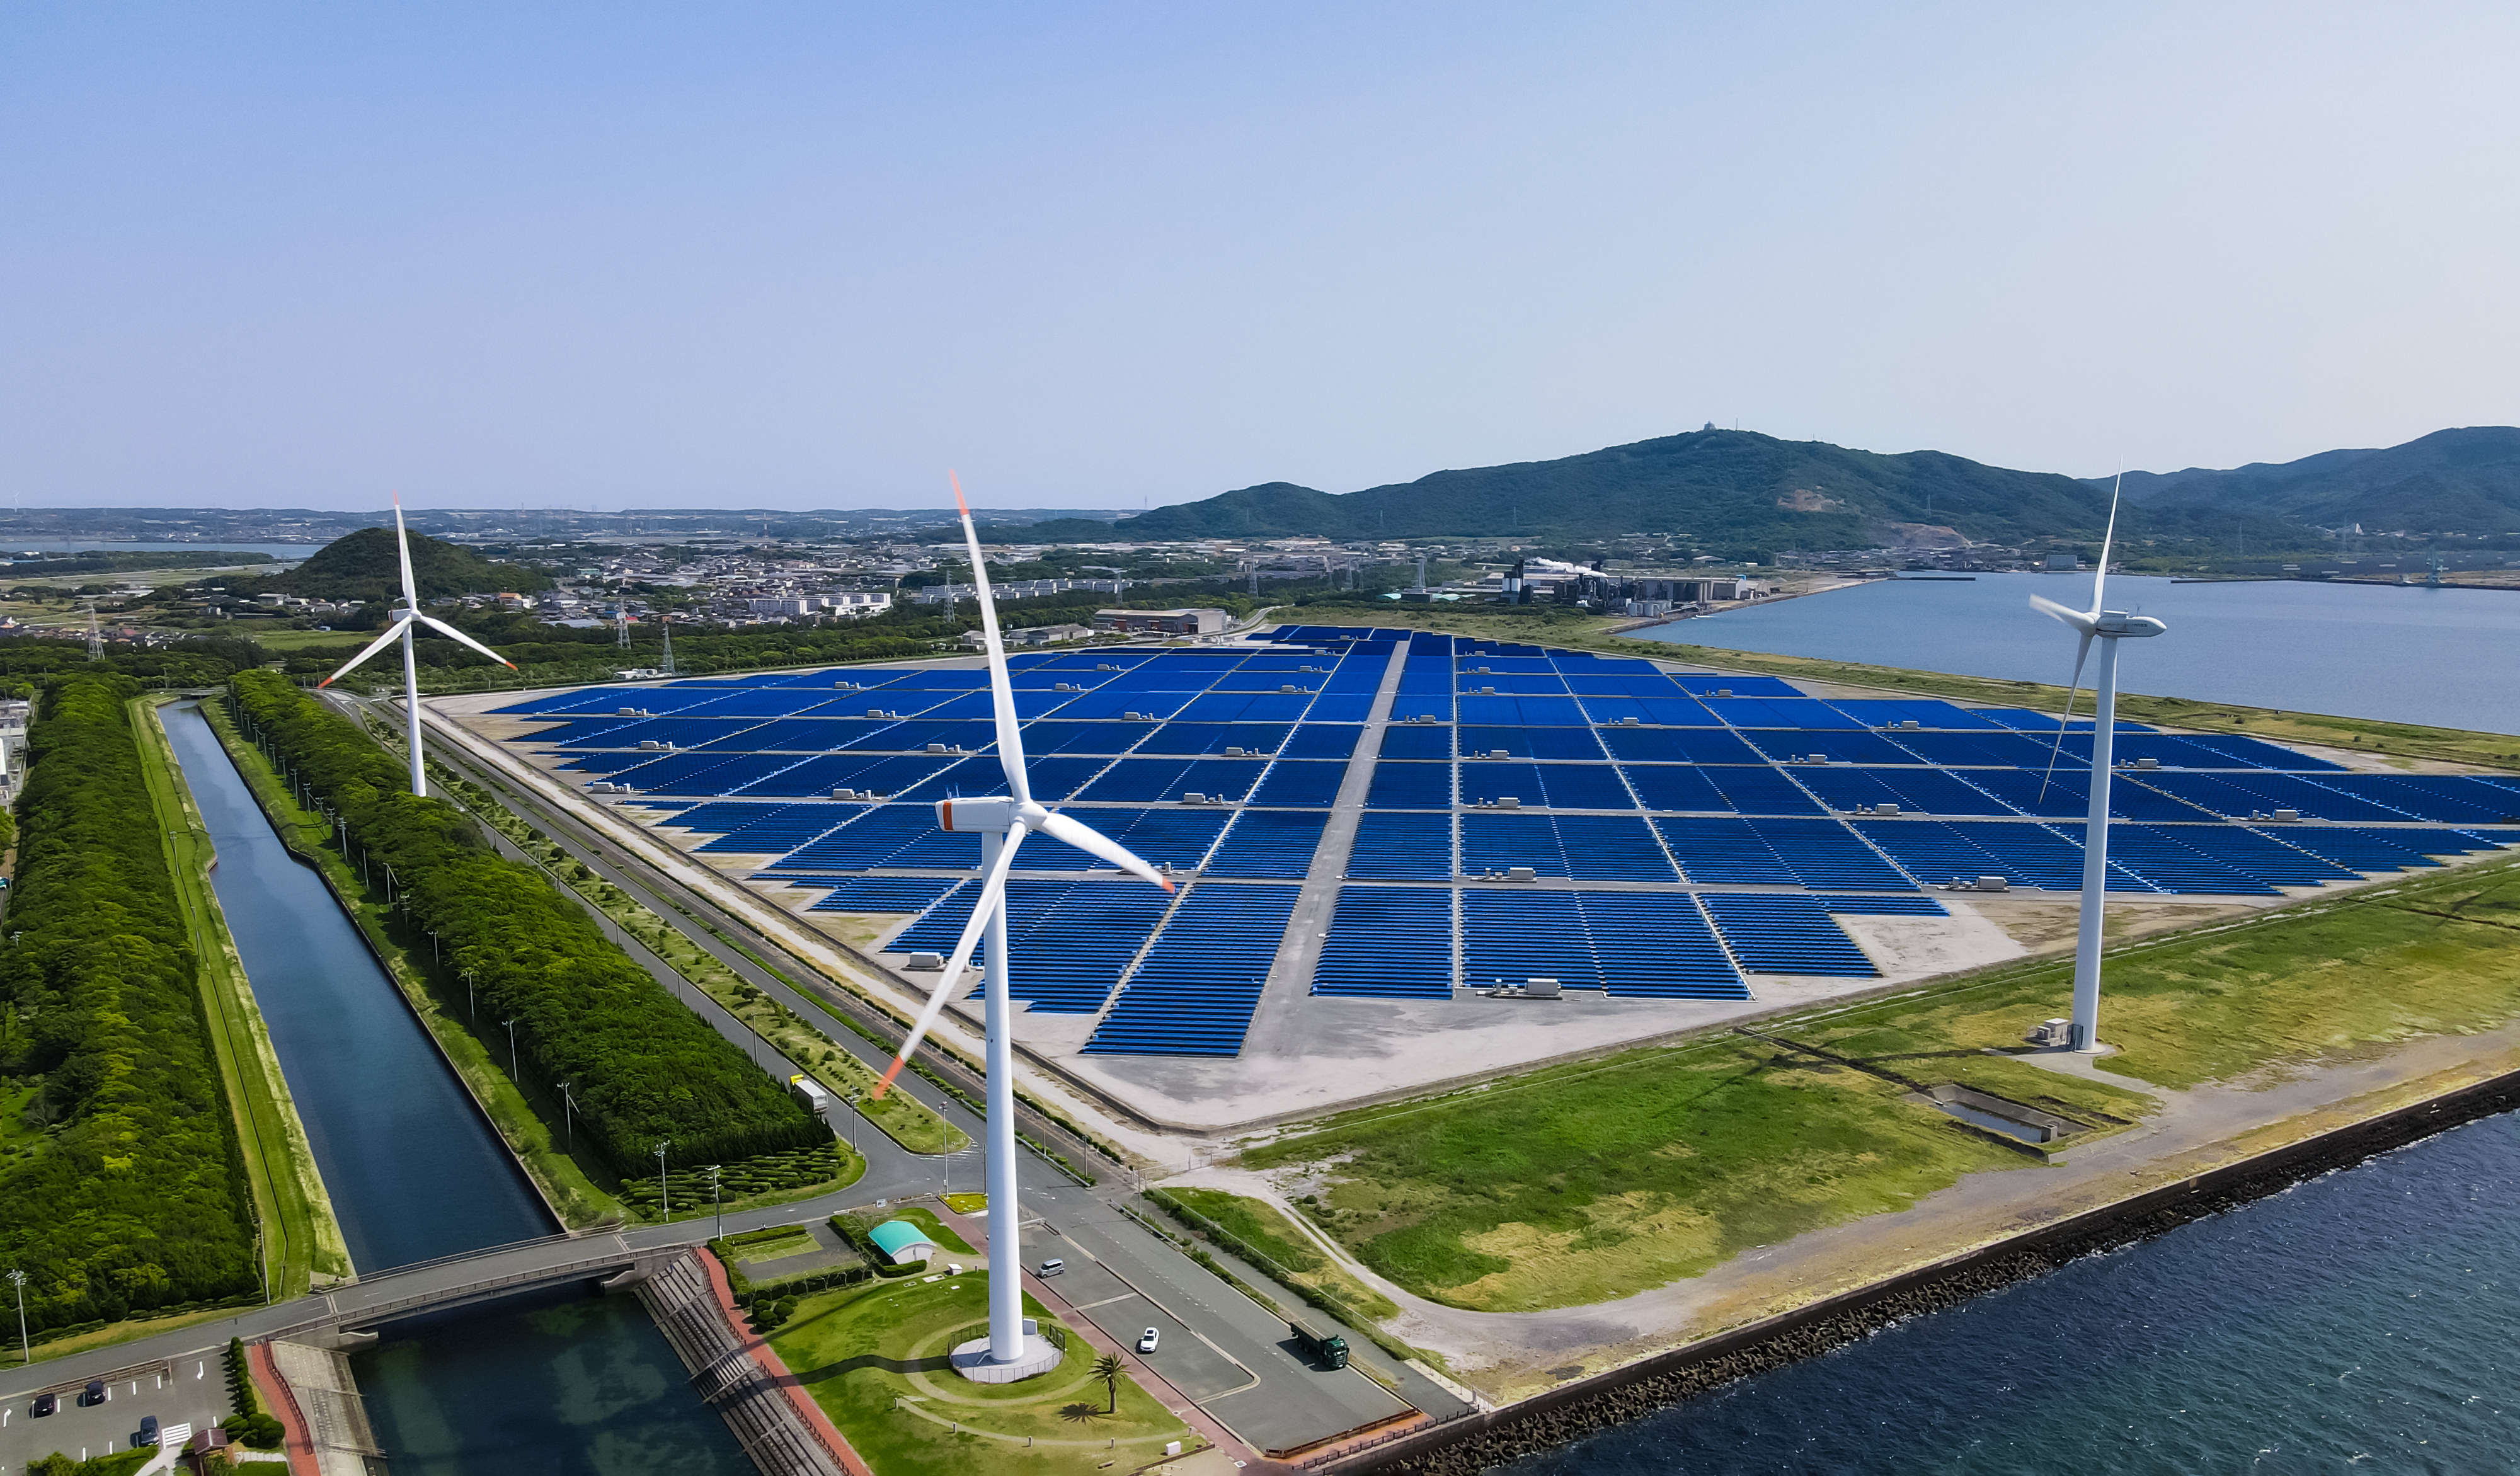 Solar power plant to showcase renewable energy